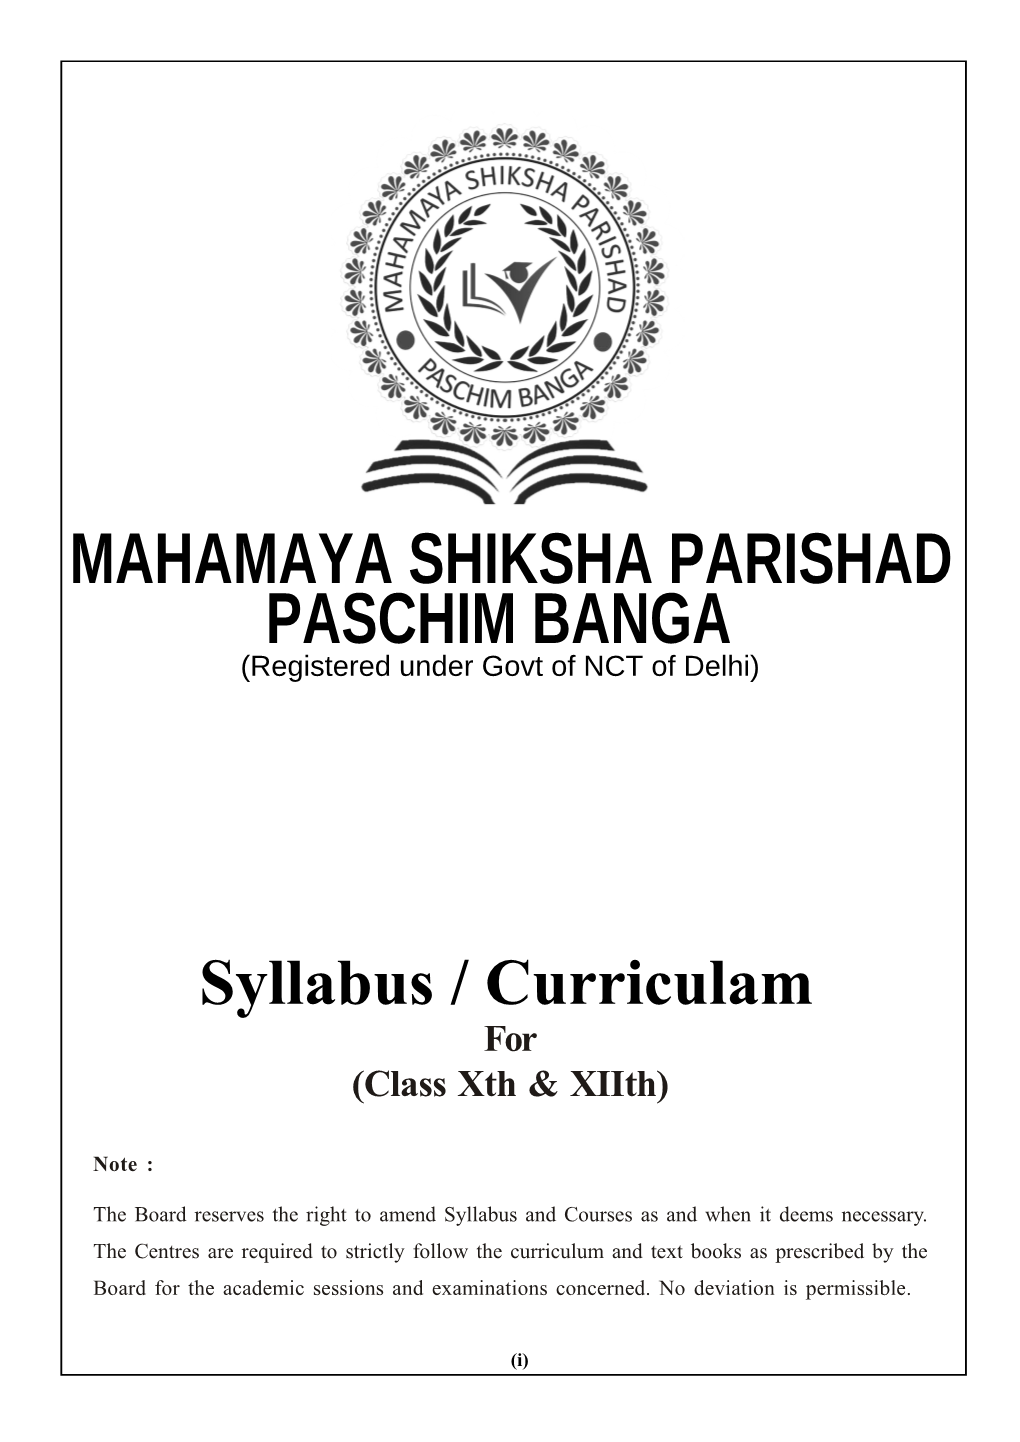 Syllabus / Curriculam for (Class Xth & Xiith)